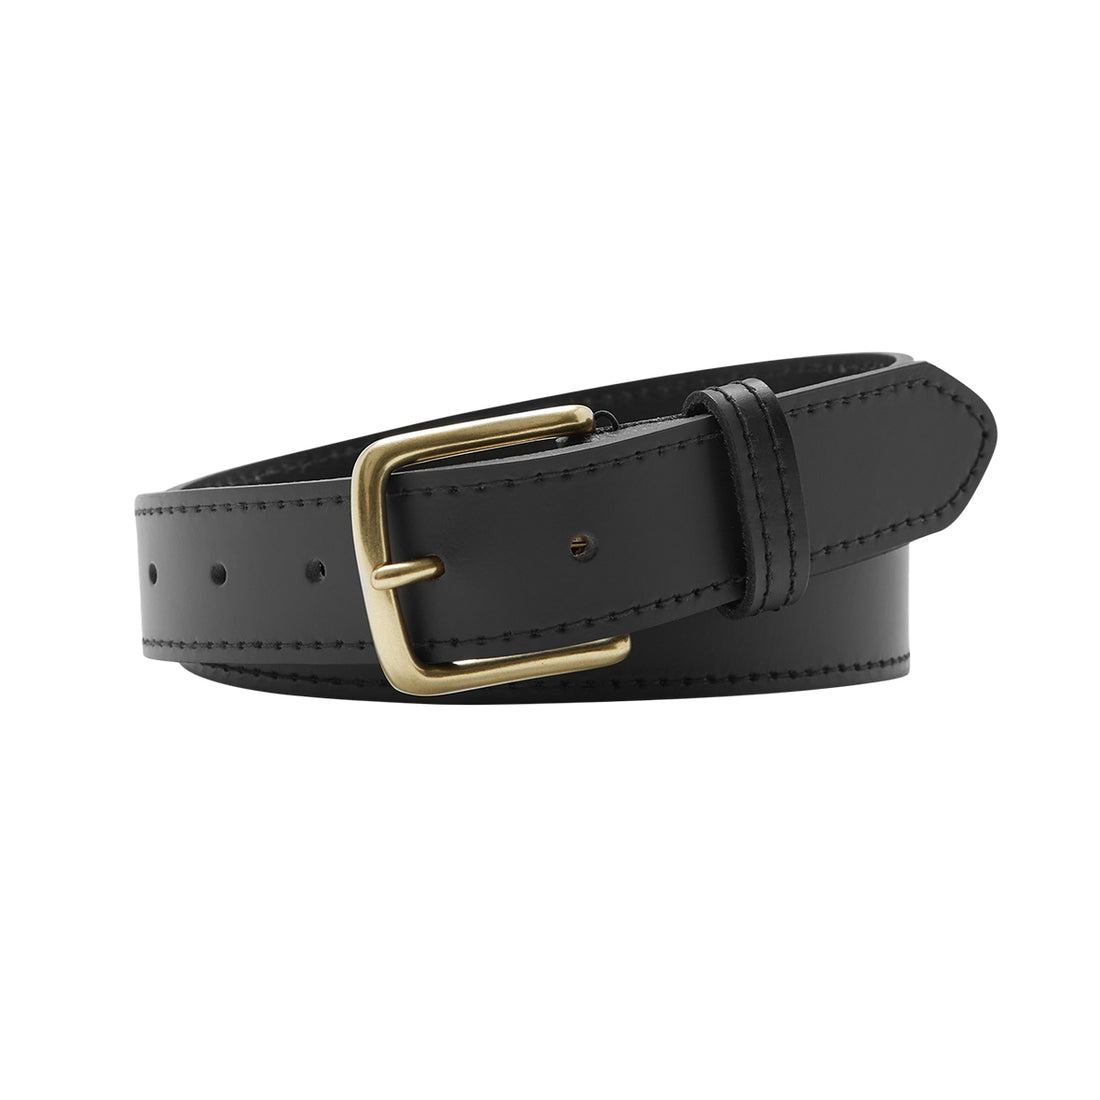 WYOMING Black Leather Belt for Men - Larger sizes | Peroz Australia